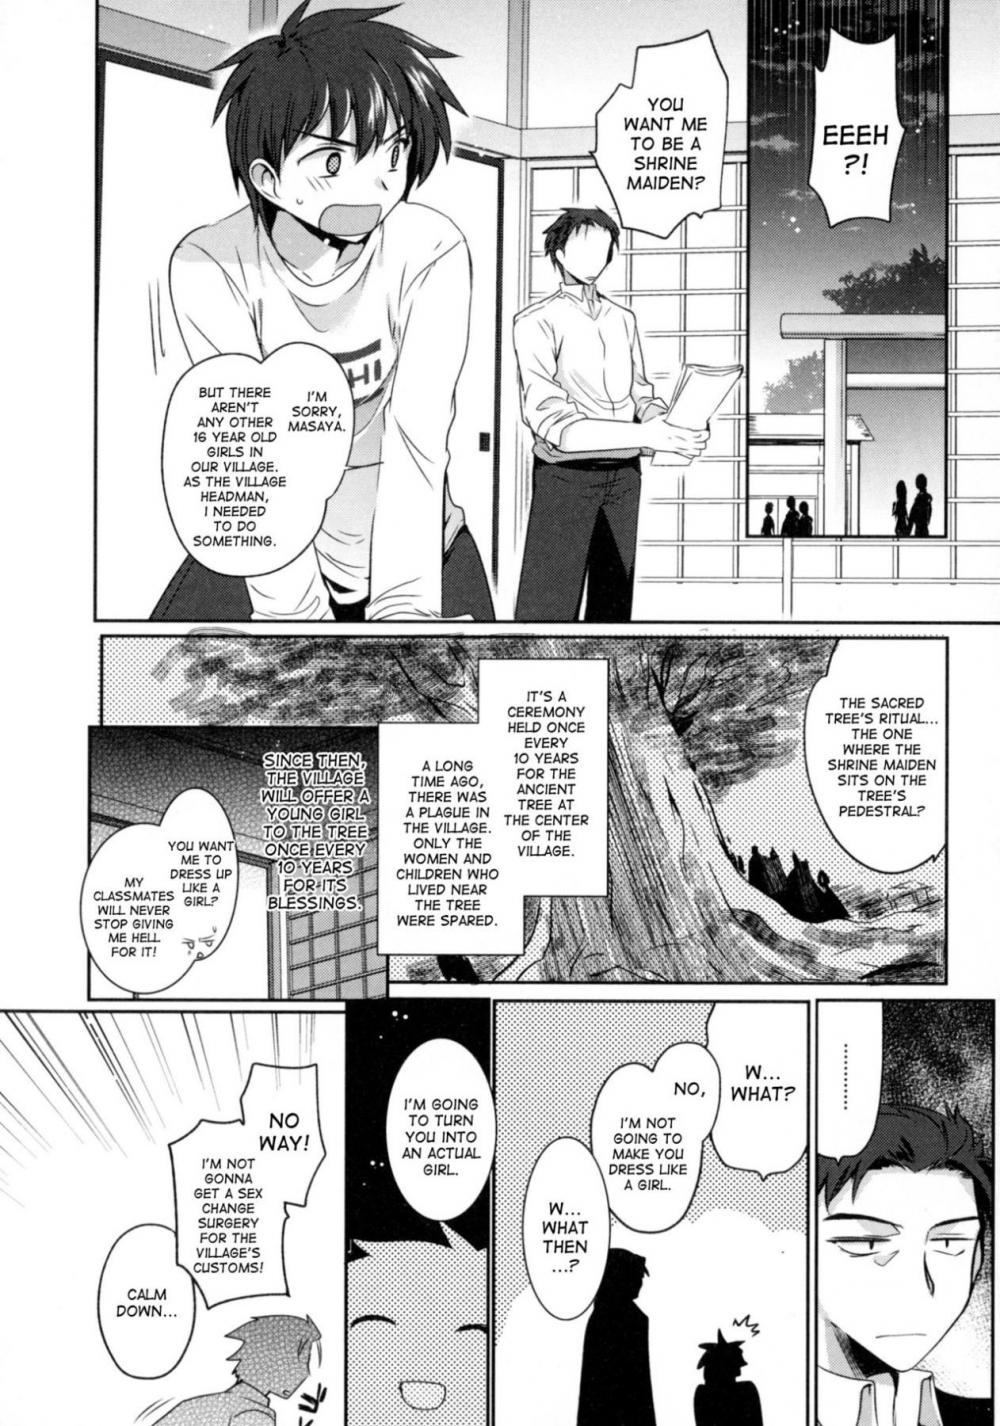 Hentai Manga Comic-Turn into a girl and become a shrine maiden-Read-2